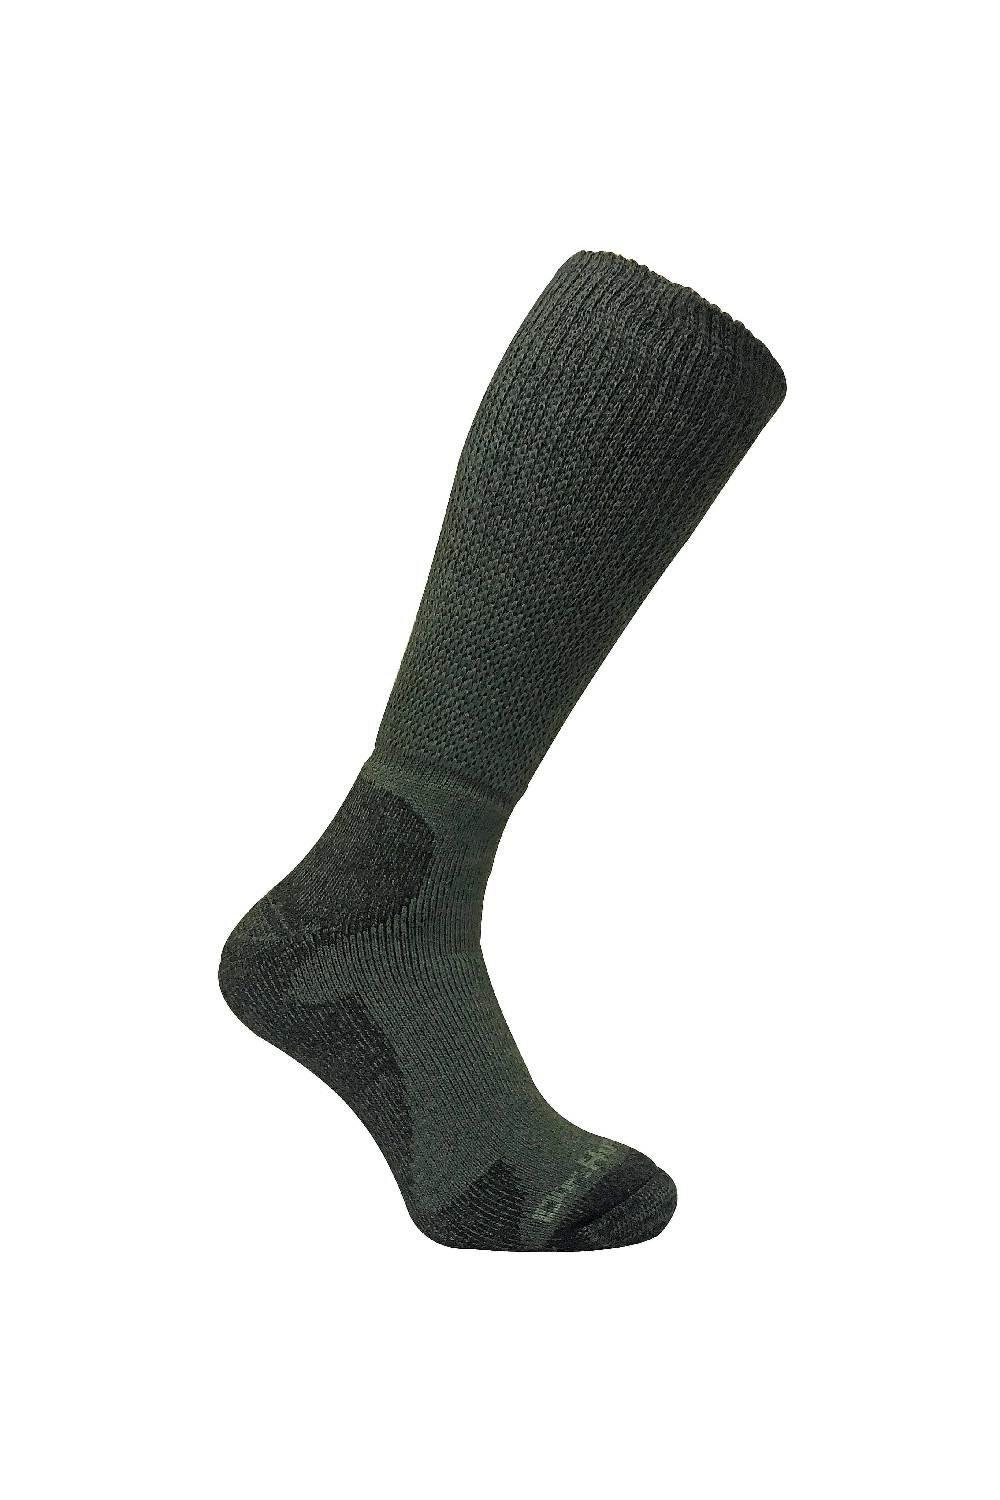 Extra Wide Knee High Merino Wool Walking Hiking Socks